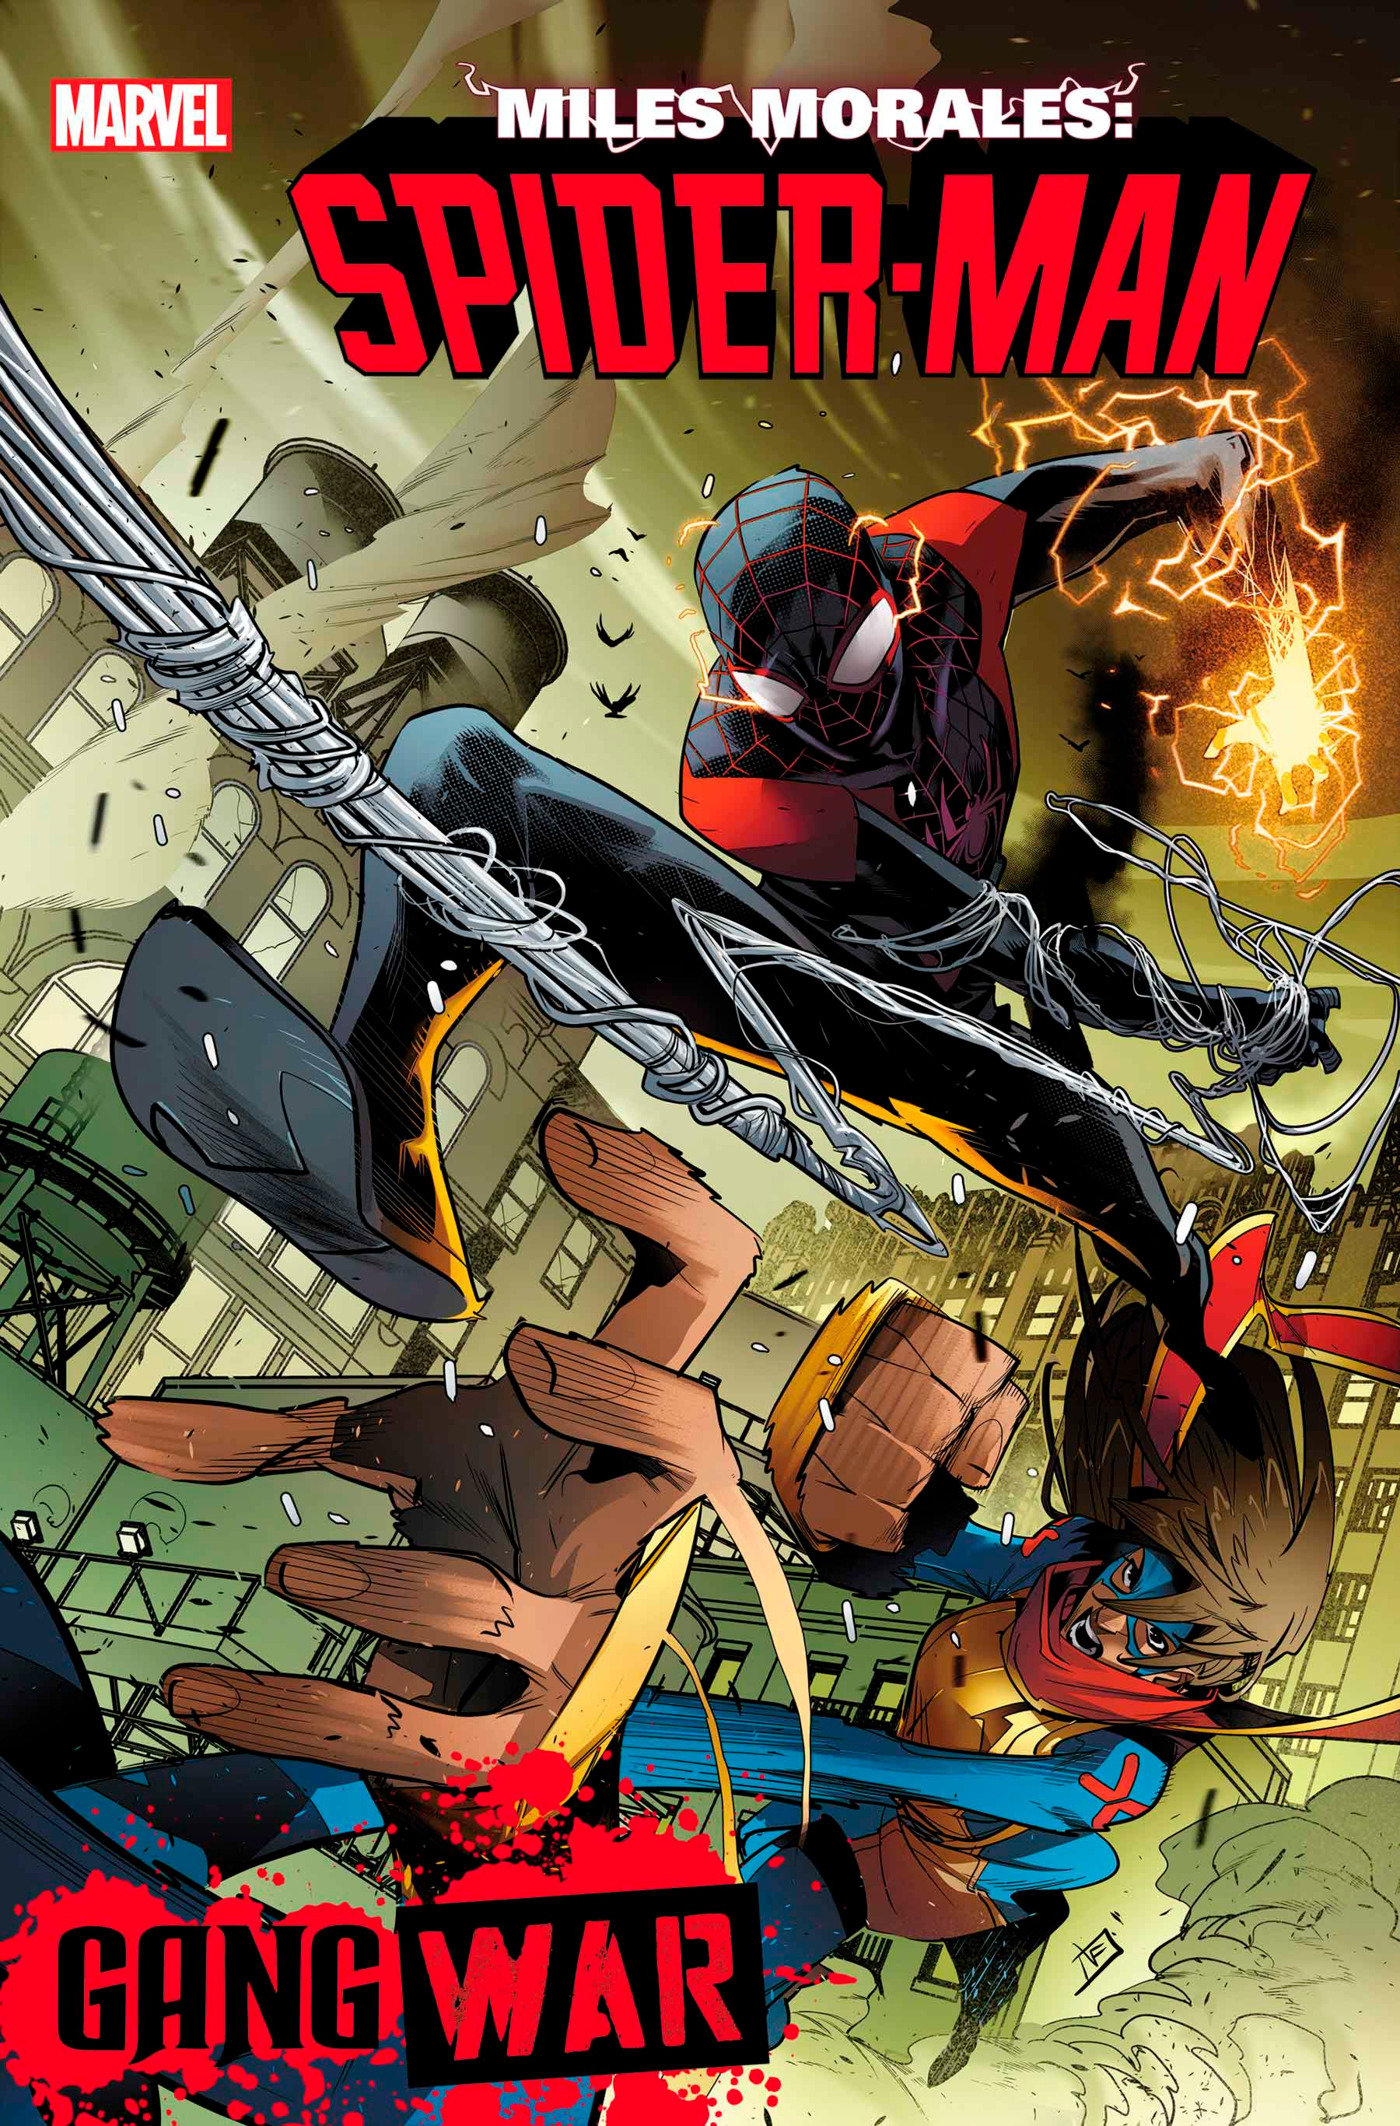 Miles Morales: Spider-Man #15 (Gang War)